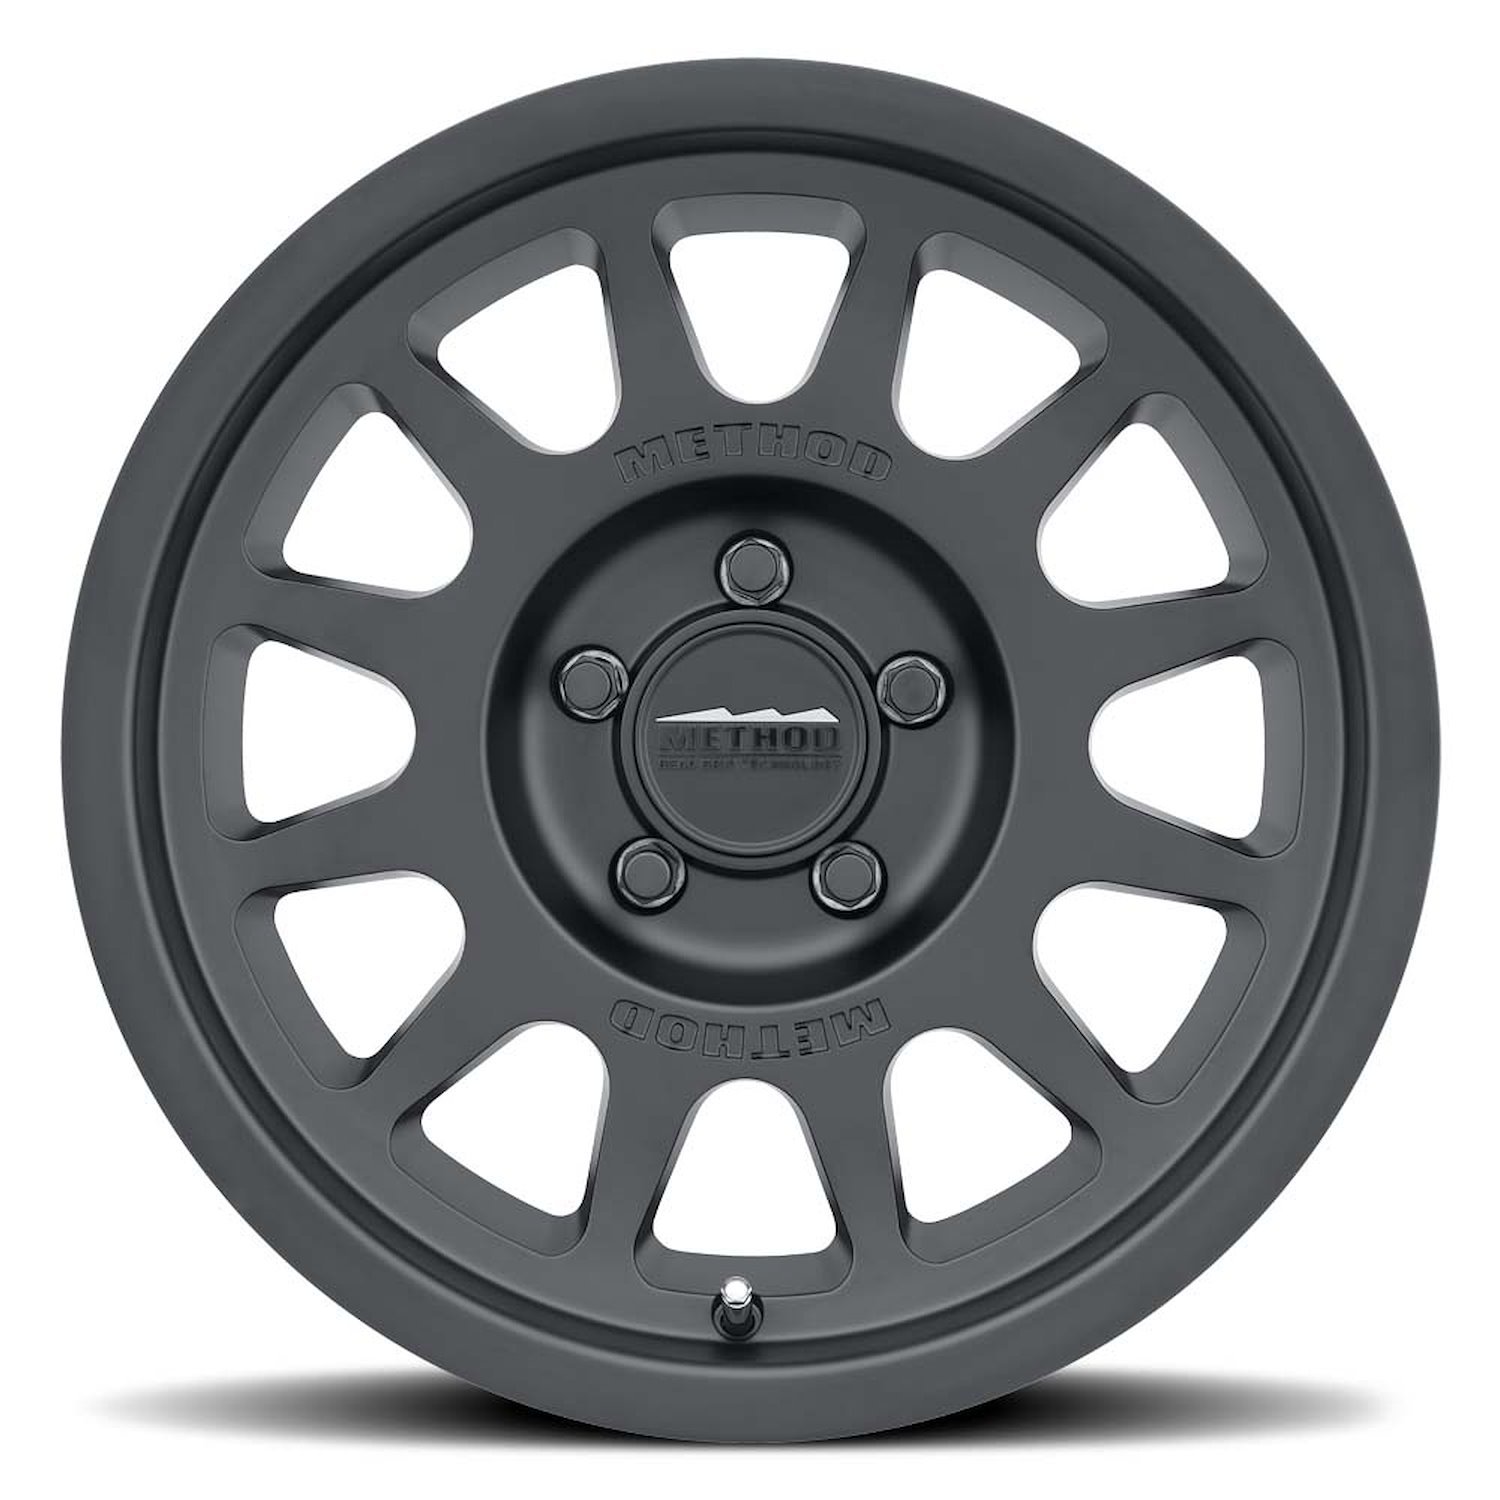 MR70357051515 TRAIL MR703 Bead Grip Wheel [Size: 15" x 7"] Matte Black